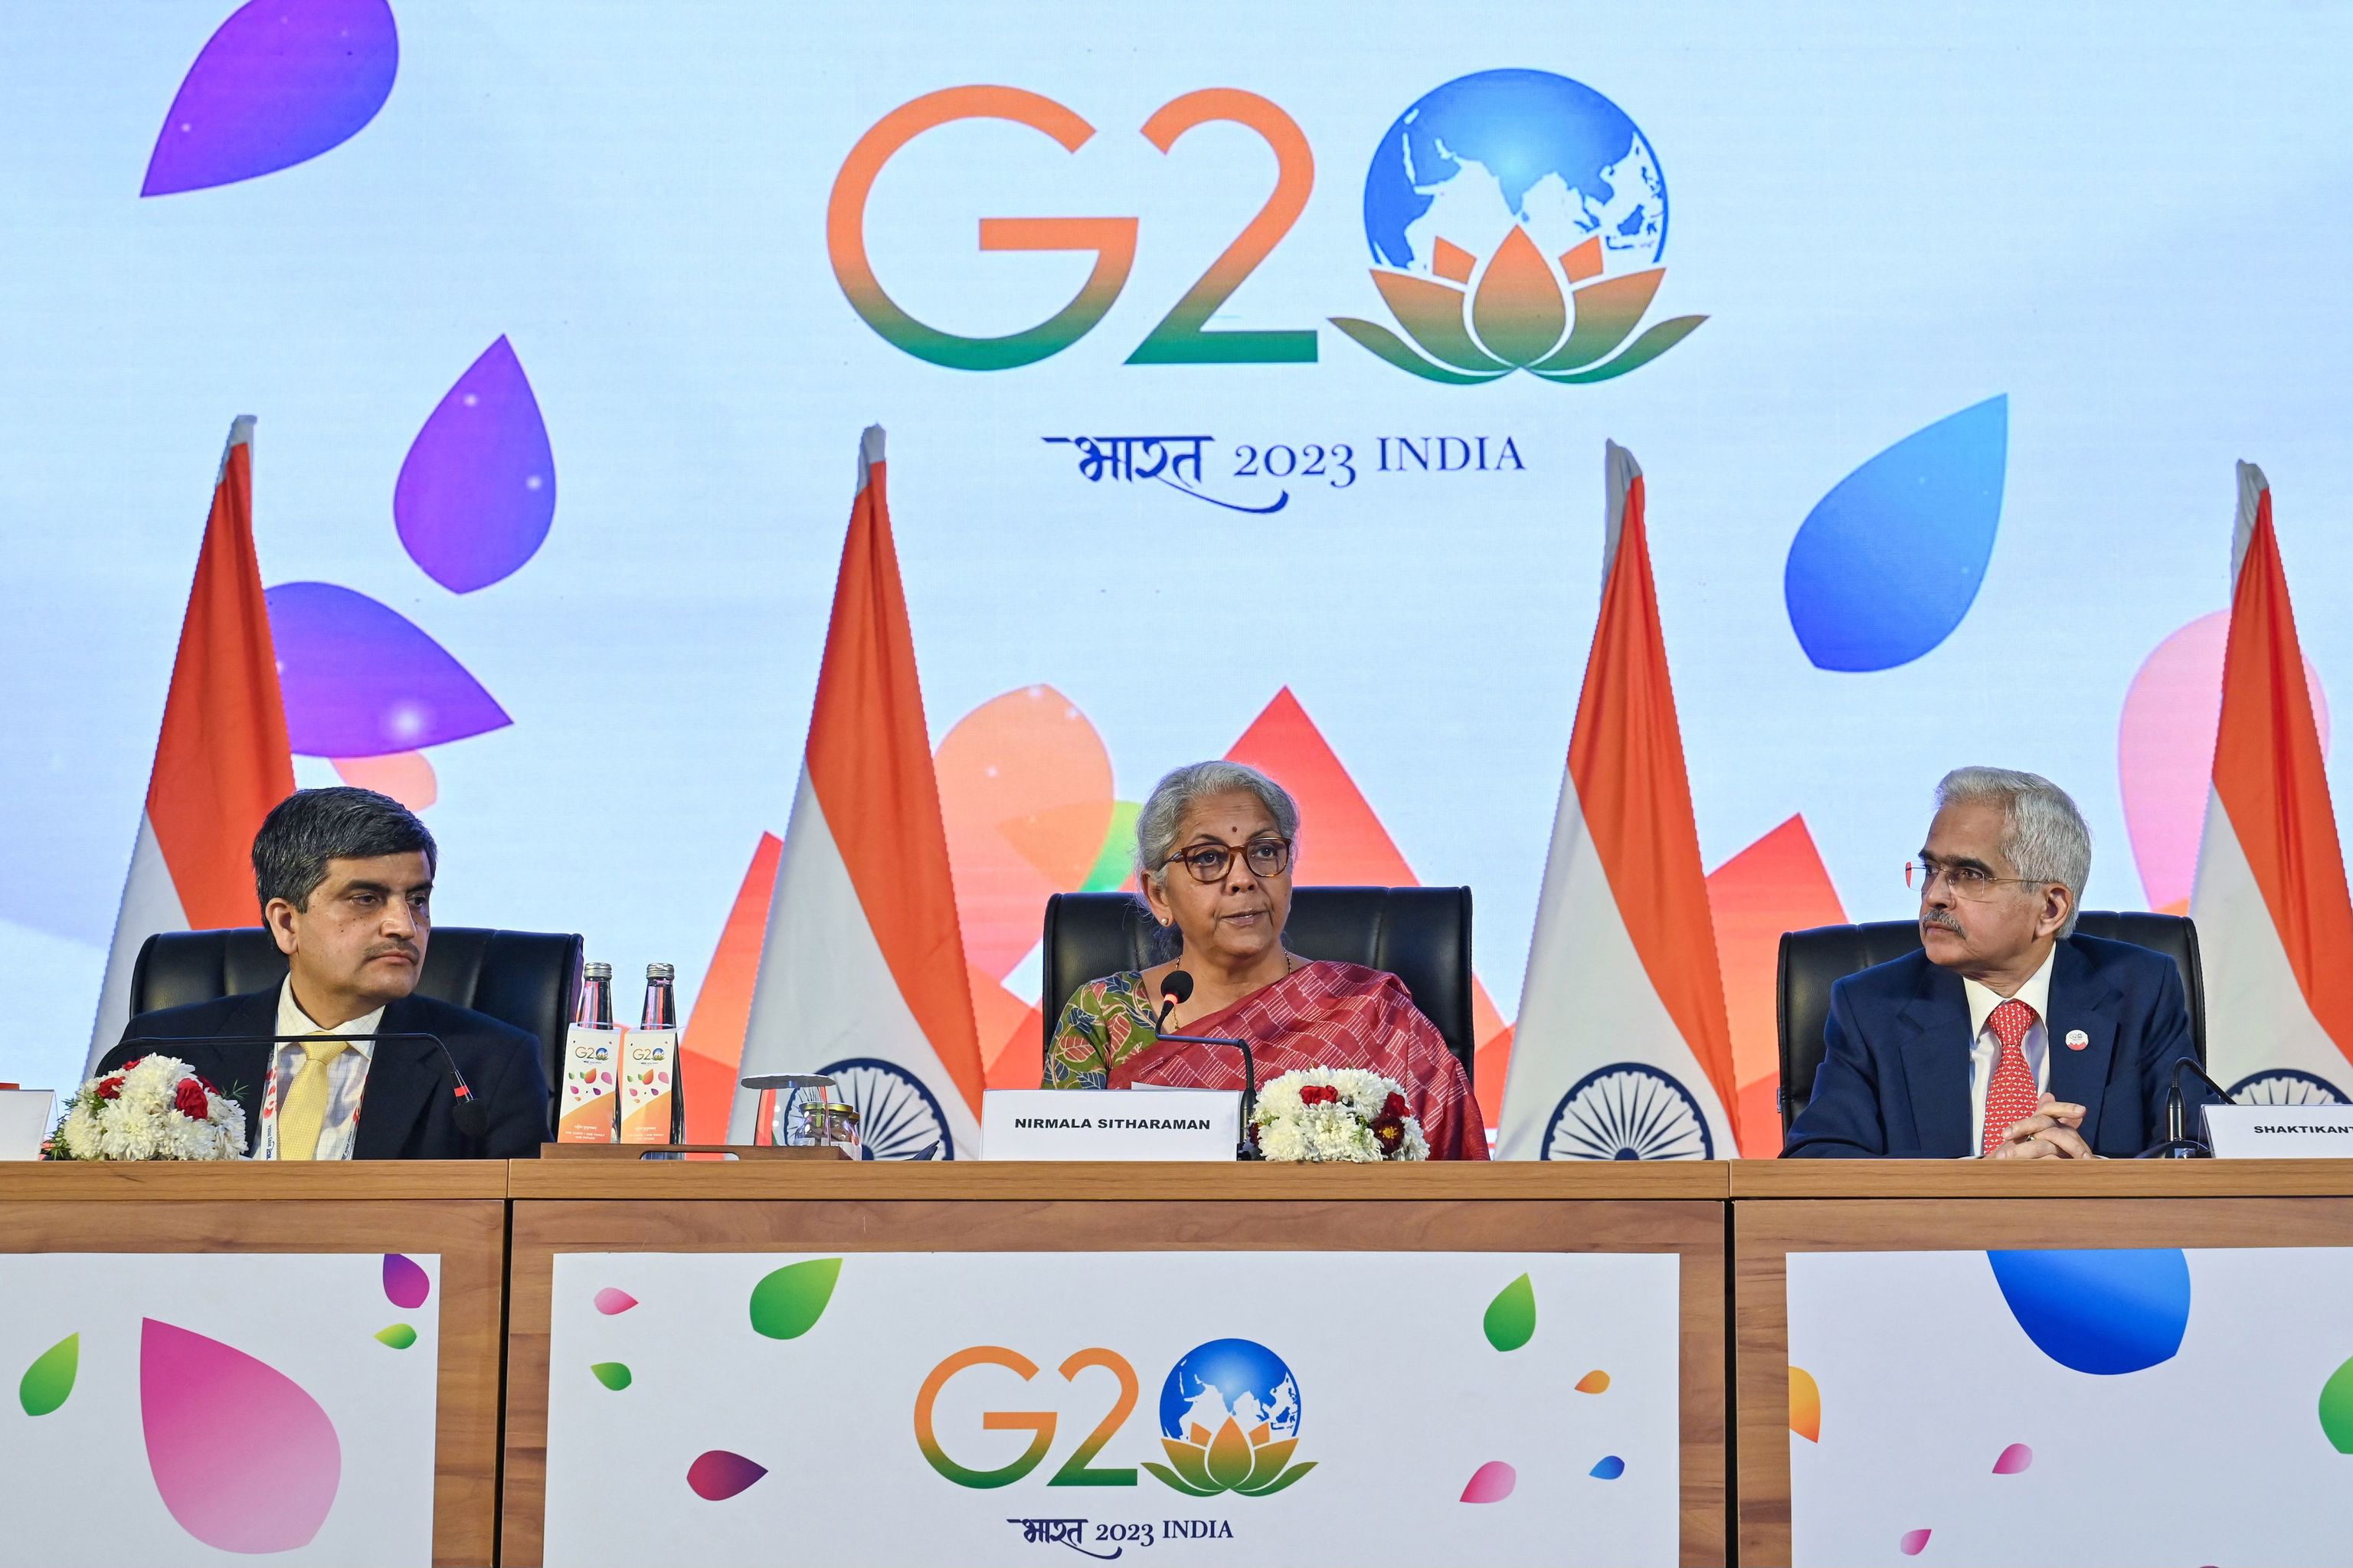 La ministra india de Finanzs, Nirmala Sitaraman, en el centro, durante la reunin del G20.